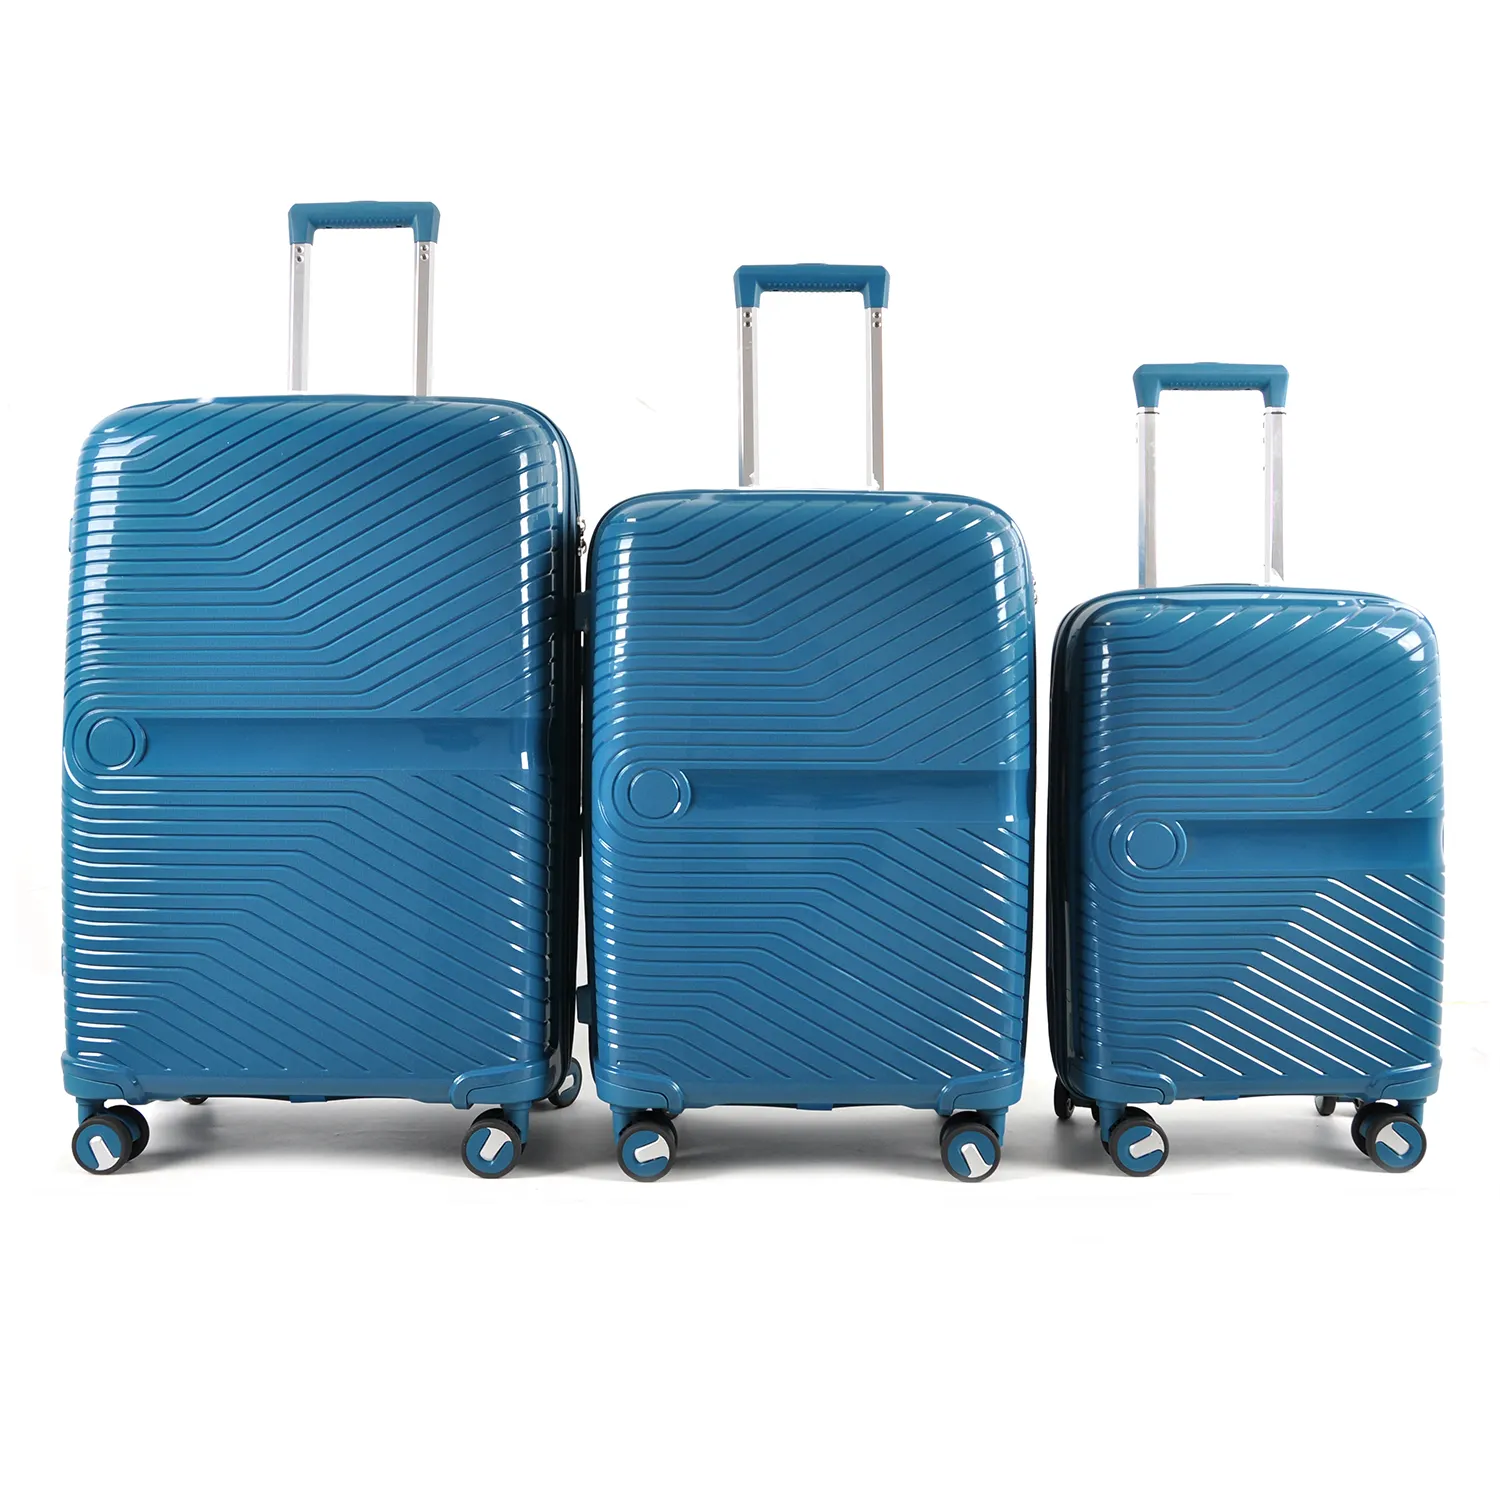 फ़ैक्टरी आउटलेट पीपी सामग्री स्वयं वजन वाला चार-टुकड़ा धारीदार सूटकेस, टिकाऊ प्लास्टिक सामान